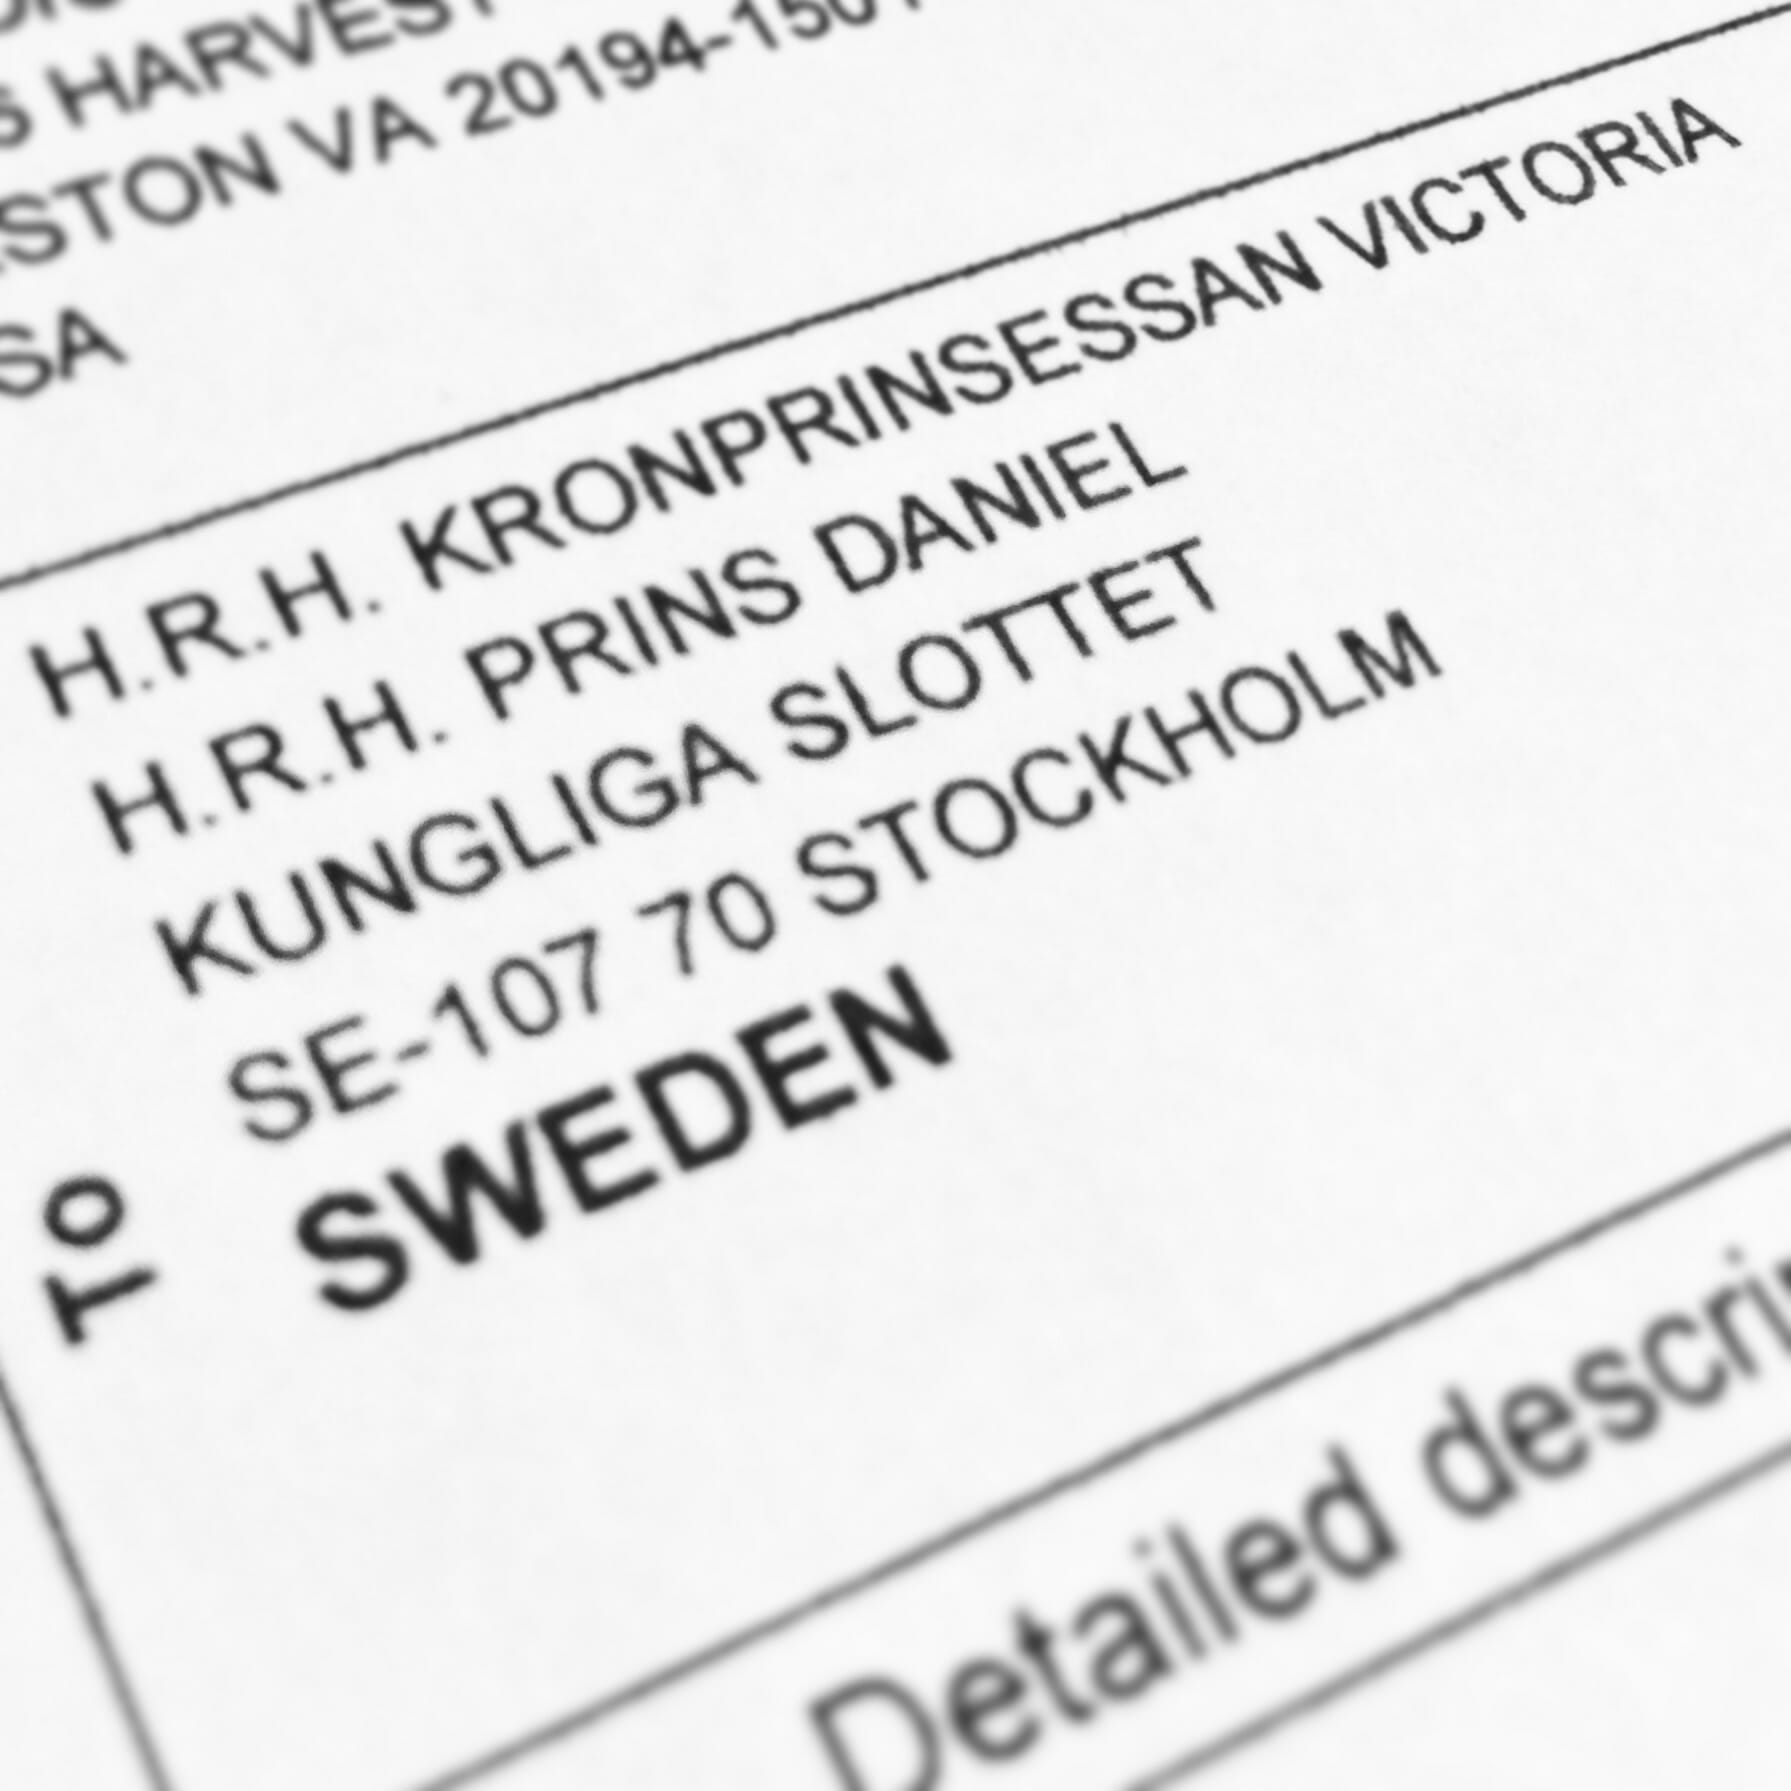 Shipment to the Swedish Royal Court